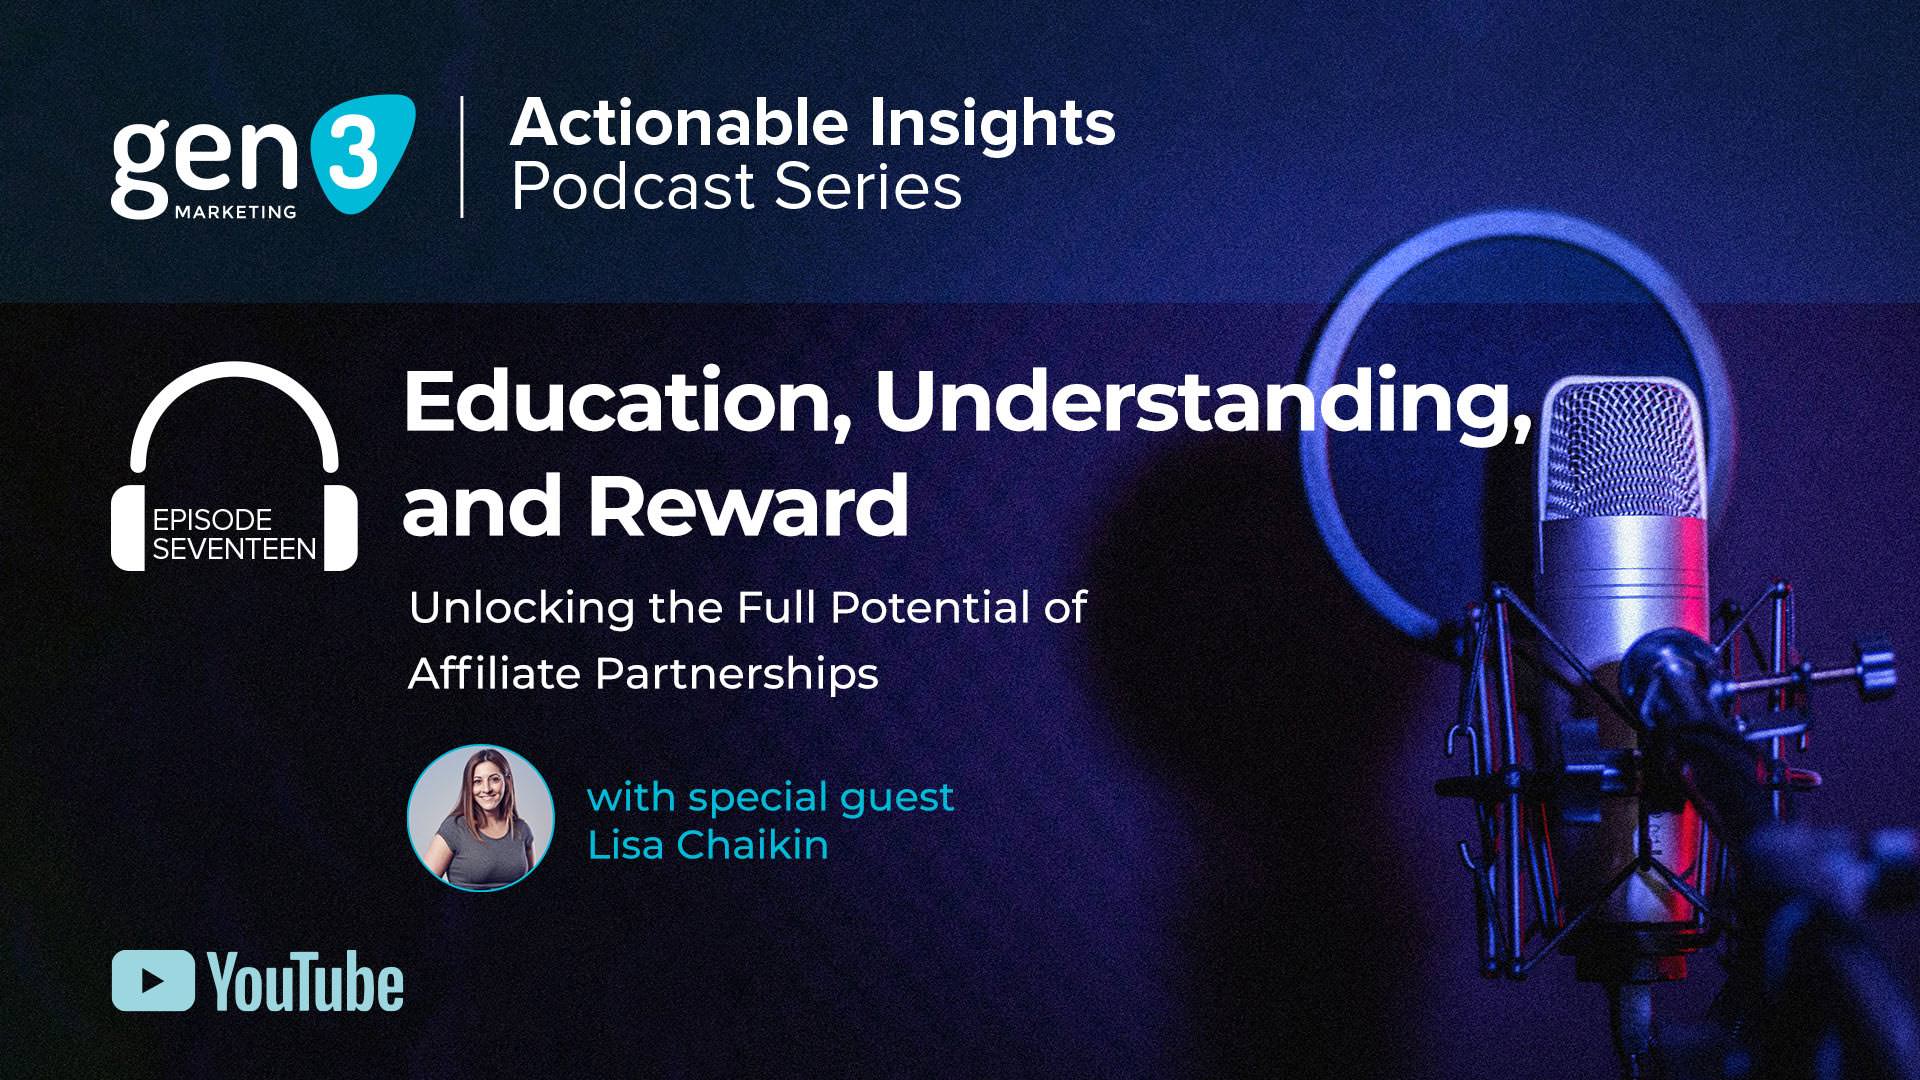 Actionable Insights Podcast Series: Episode 17 - Education, Understanding & Reward